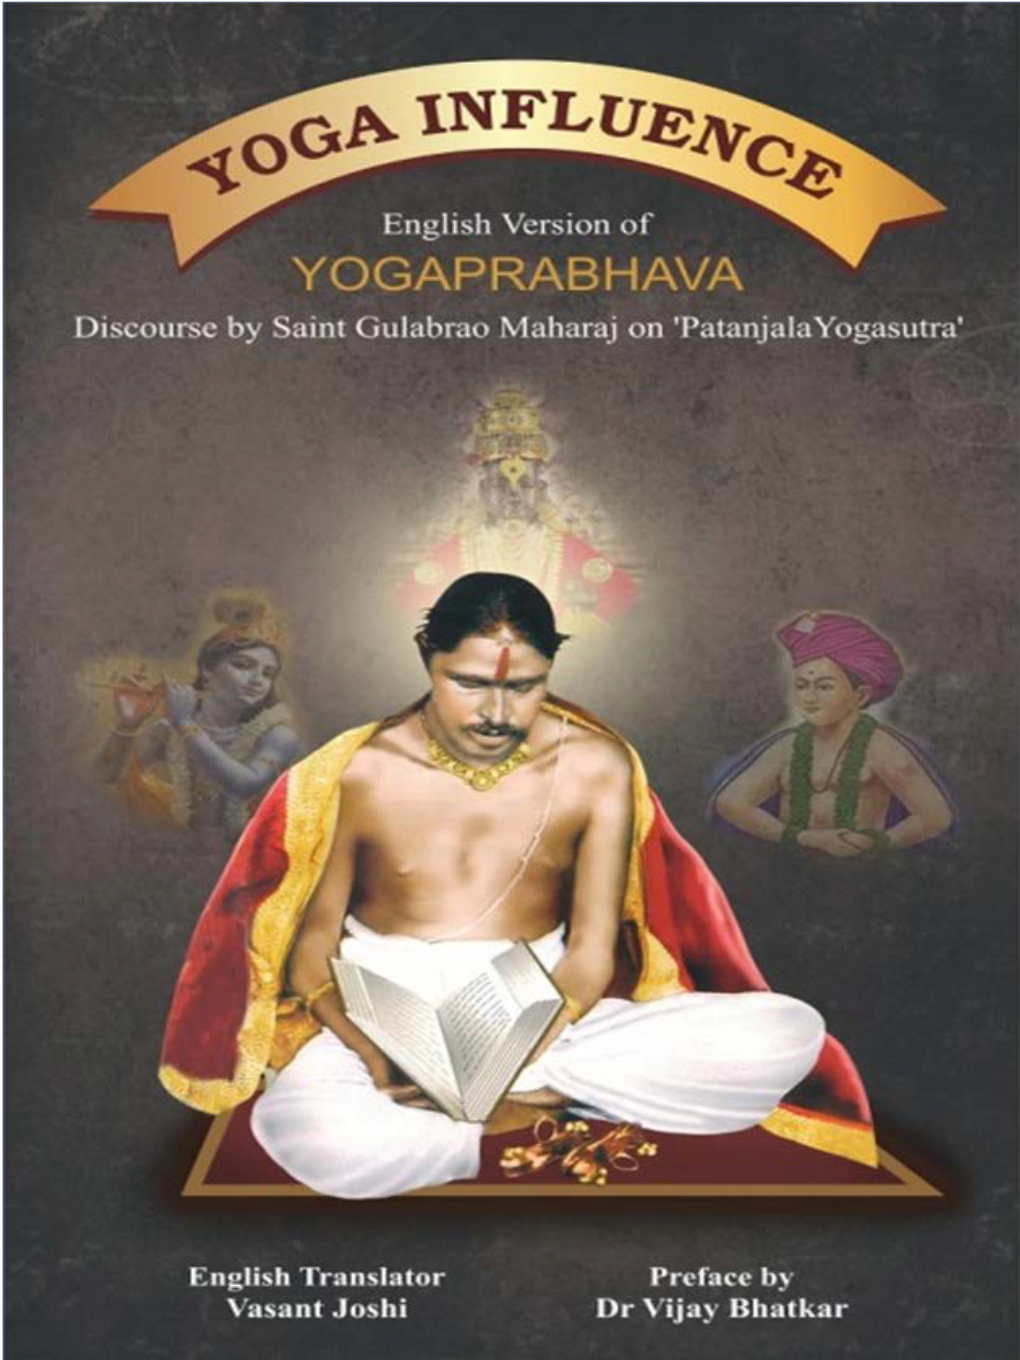 YOGA INFLUENCE YOGA INFLUENCE English Version of YOGAPRABHAVA Discourse by Saint Gulabrao Maharaj on ‘Patanjala Yogasutra’